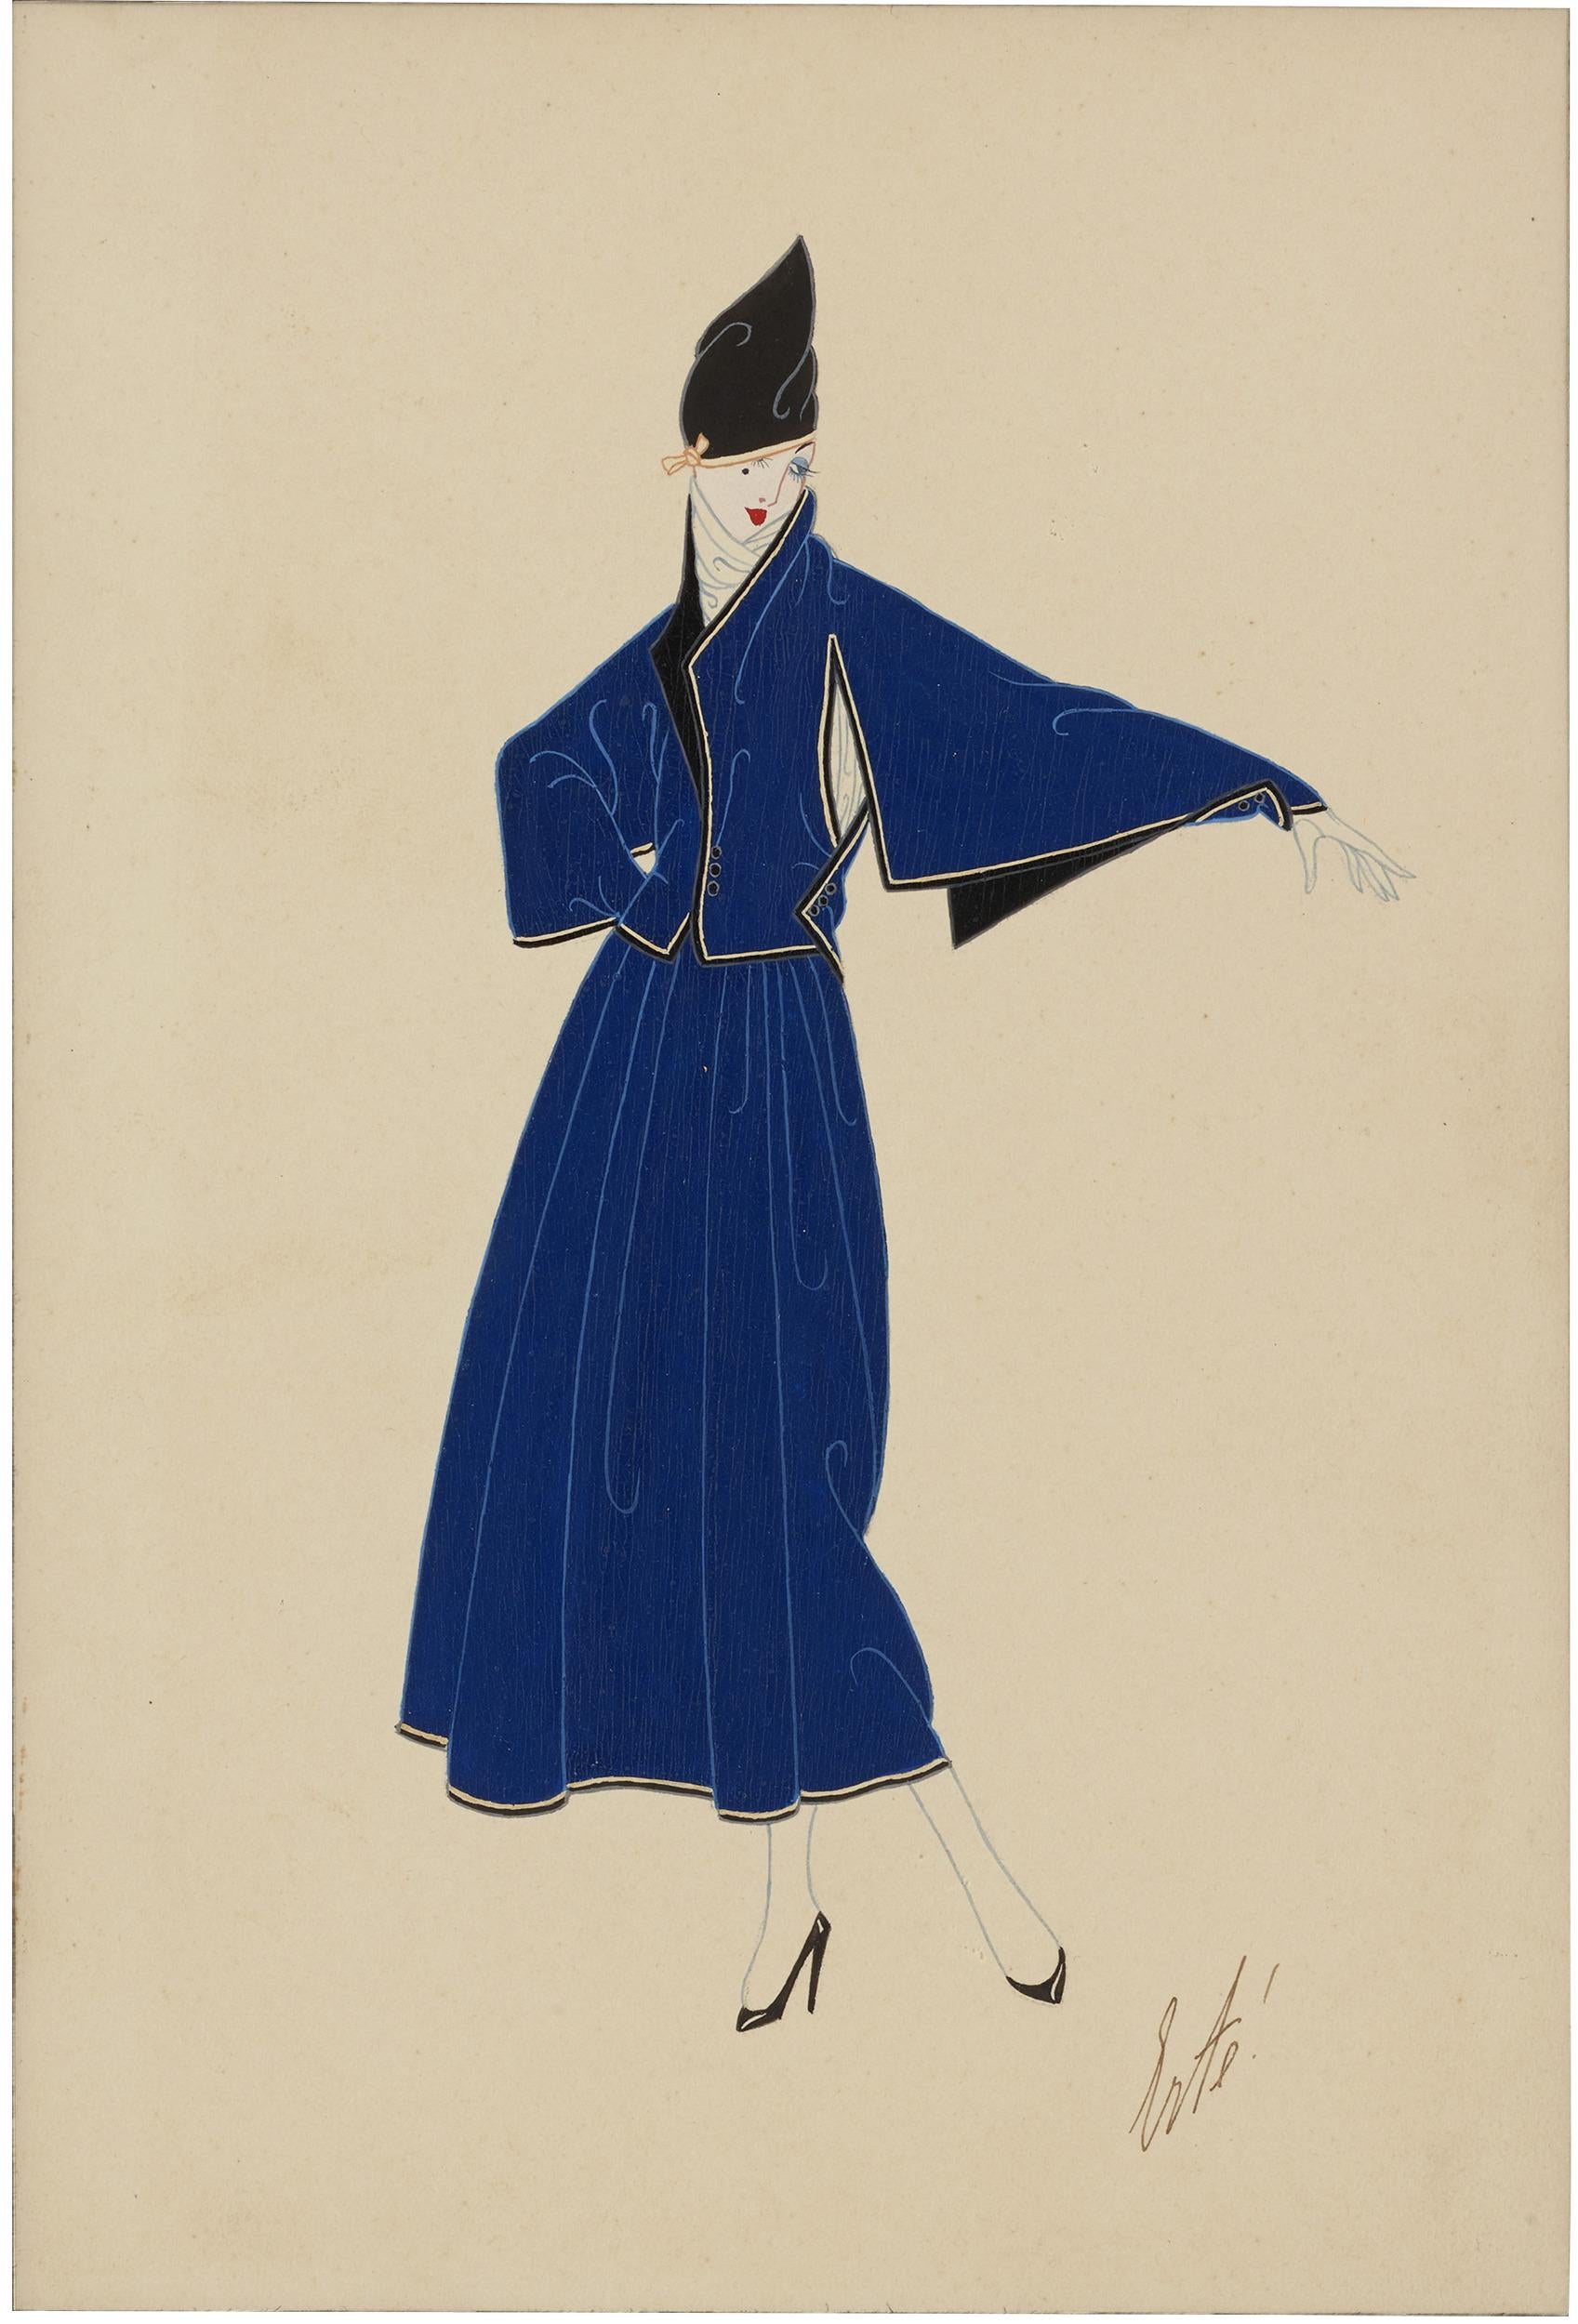 Erté (Romain de Tirtoff)
1892-1990  Russian-French
Costume tailleur(Tailored suit)

Signed 